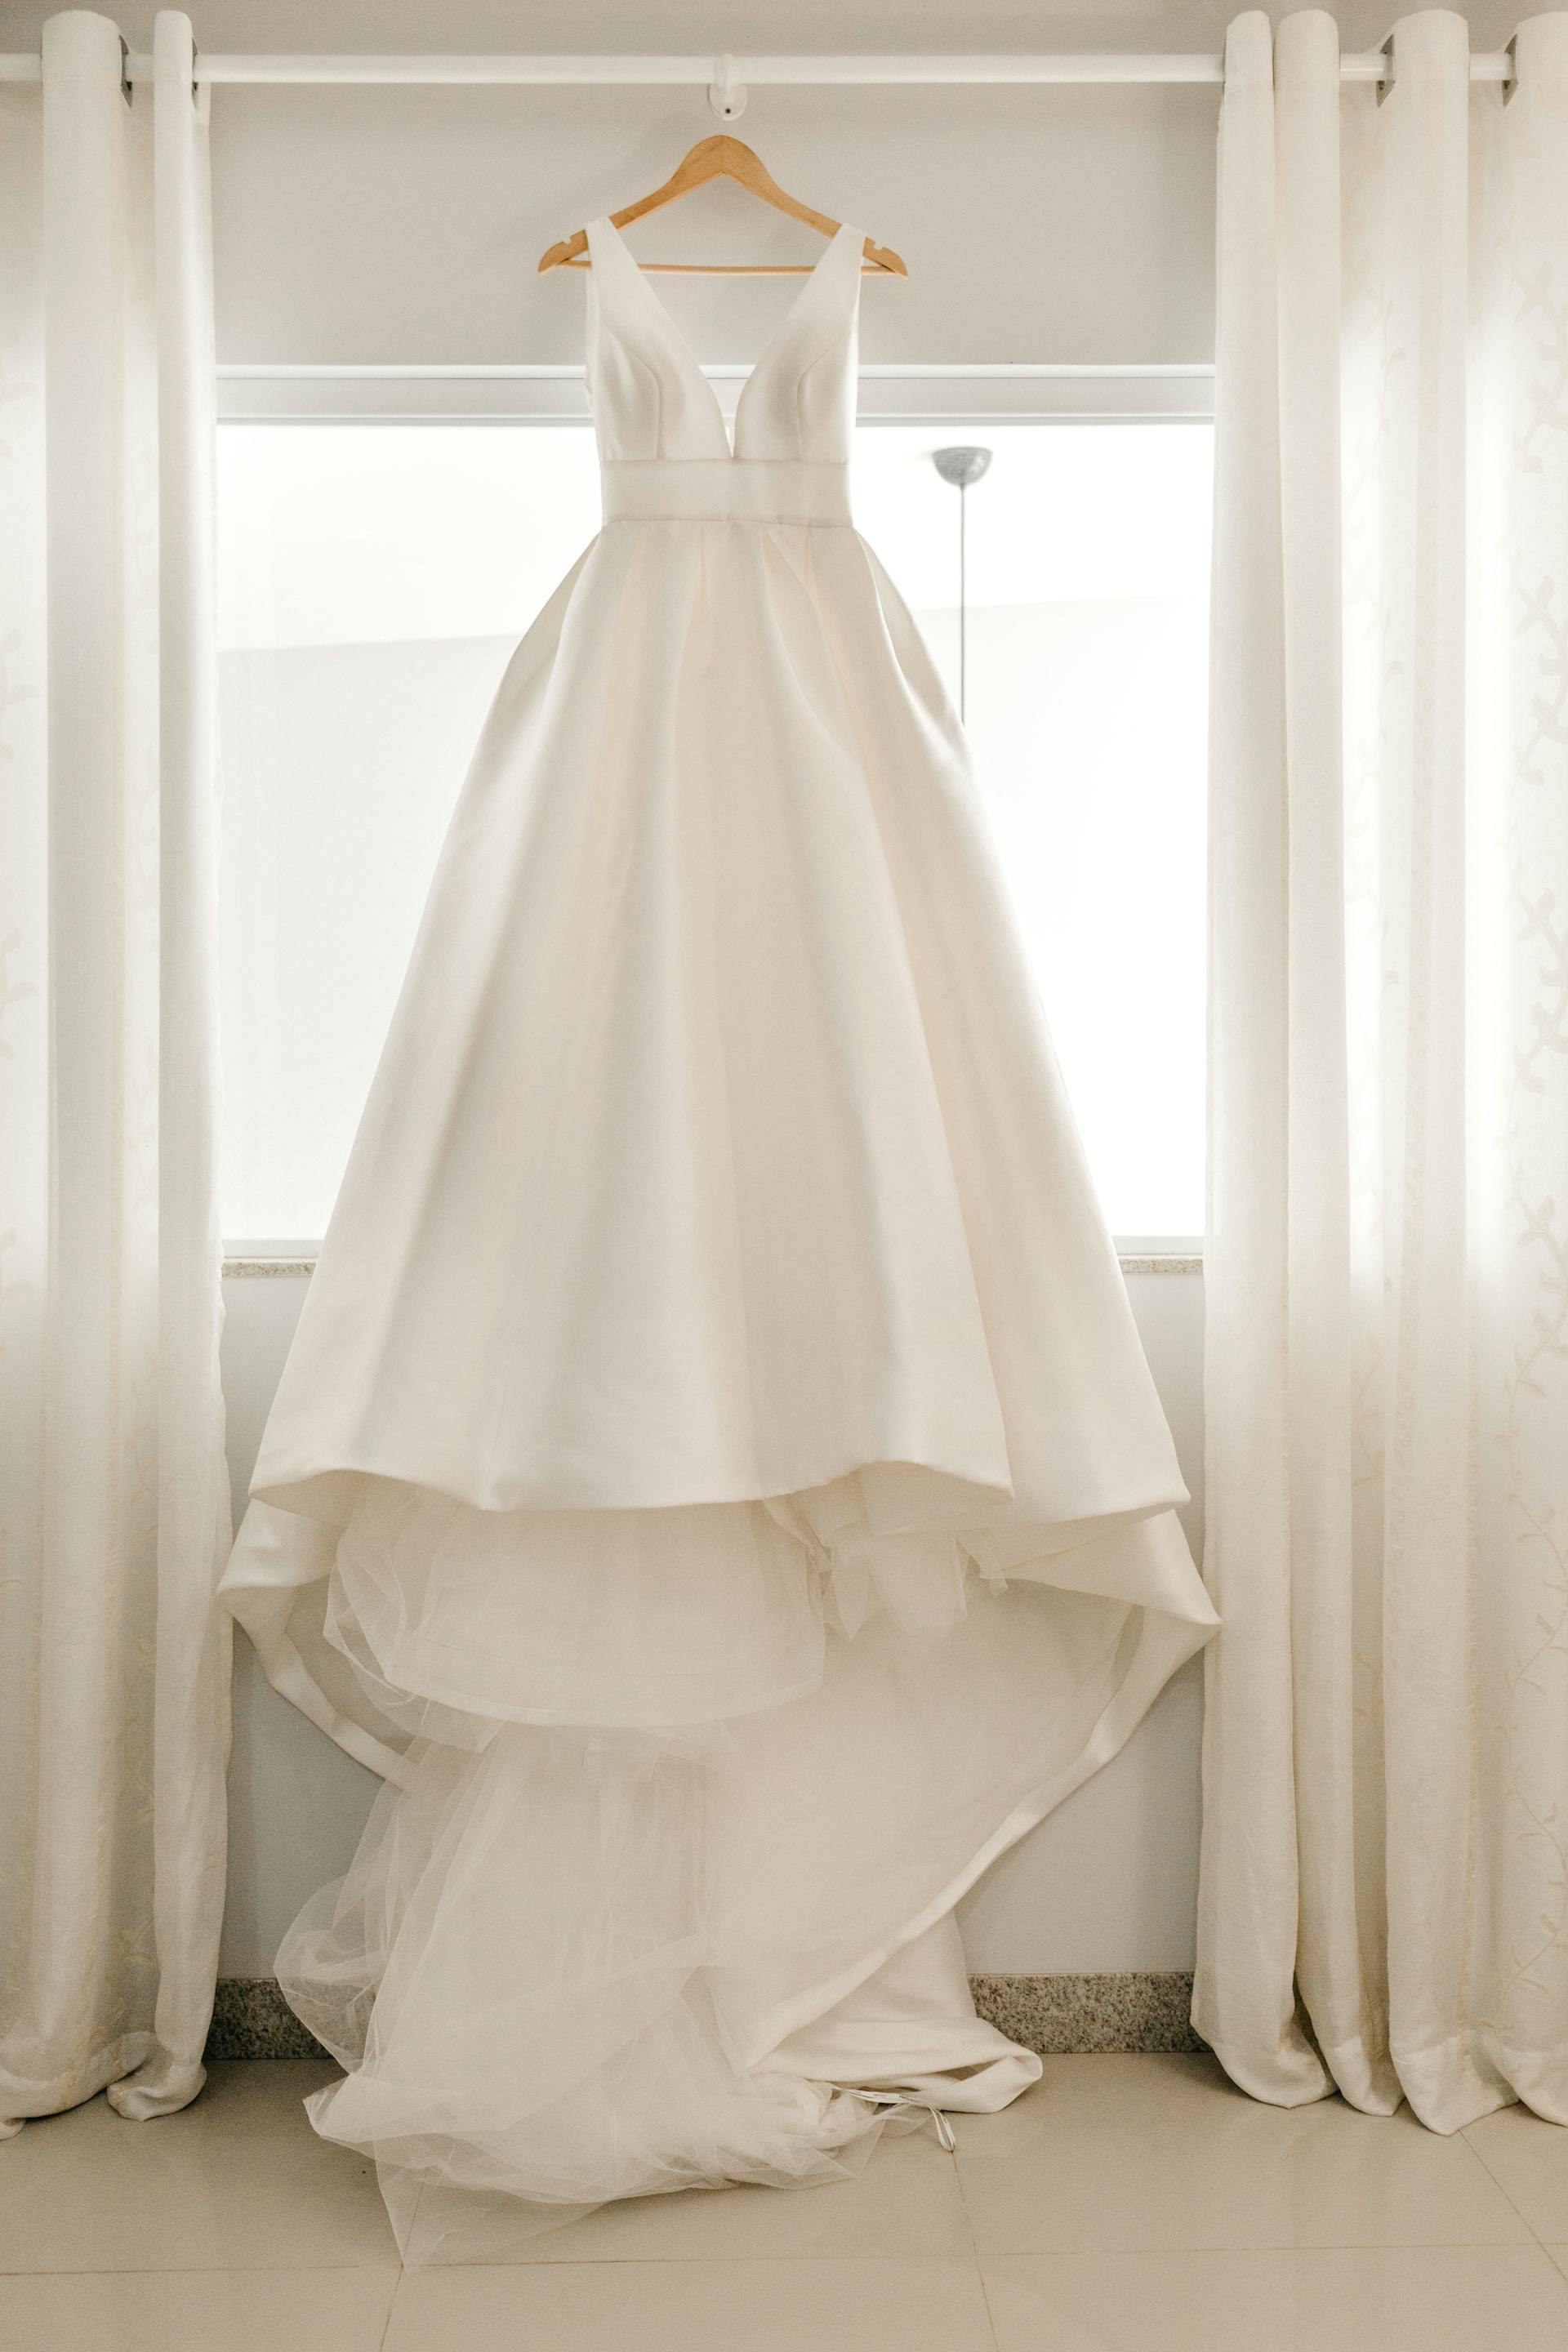 A white wedding dress on a hanger | Source: Pexels